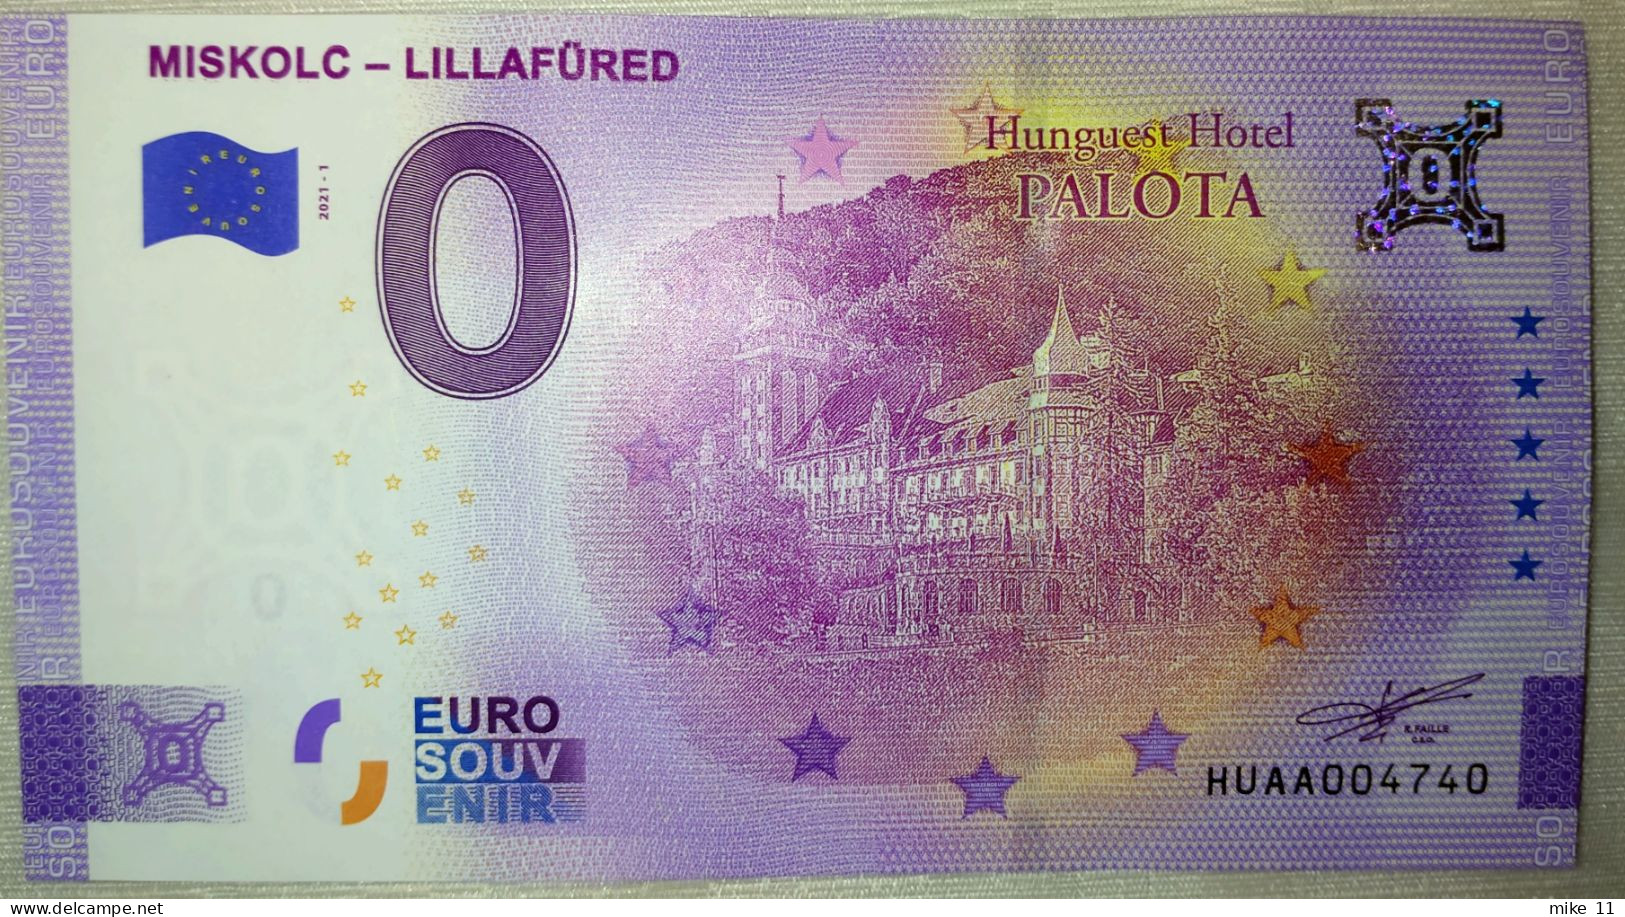 0 Euro Souvenir MISKOLC - LILLAFURED Hungary HUAA 2021-1 Nr. 4740 - Autres - Europe